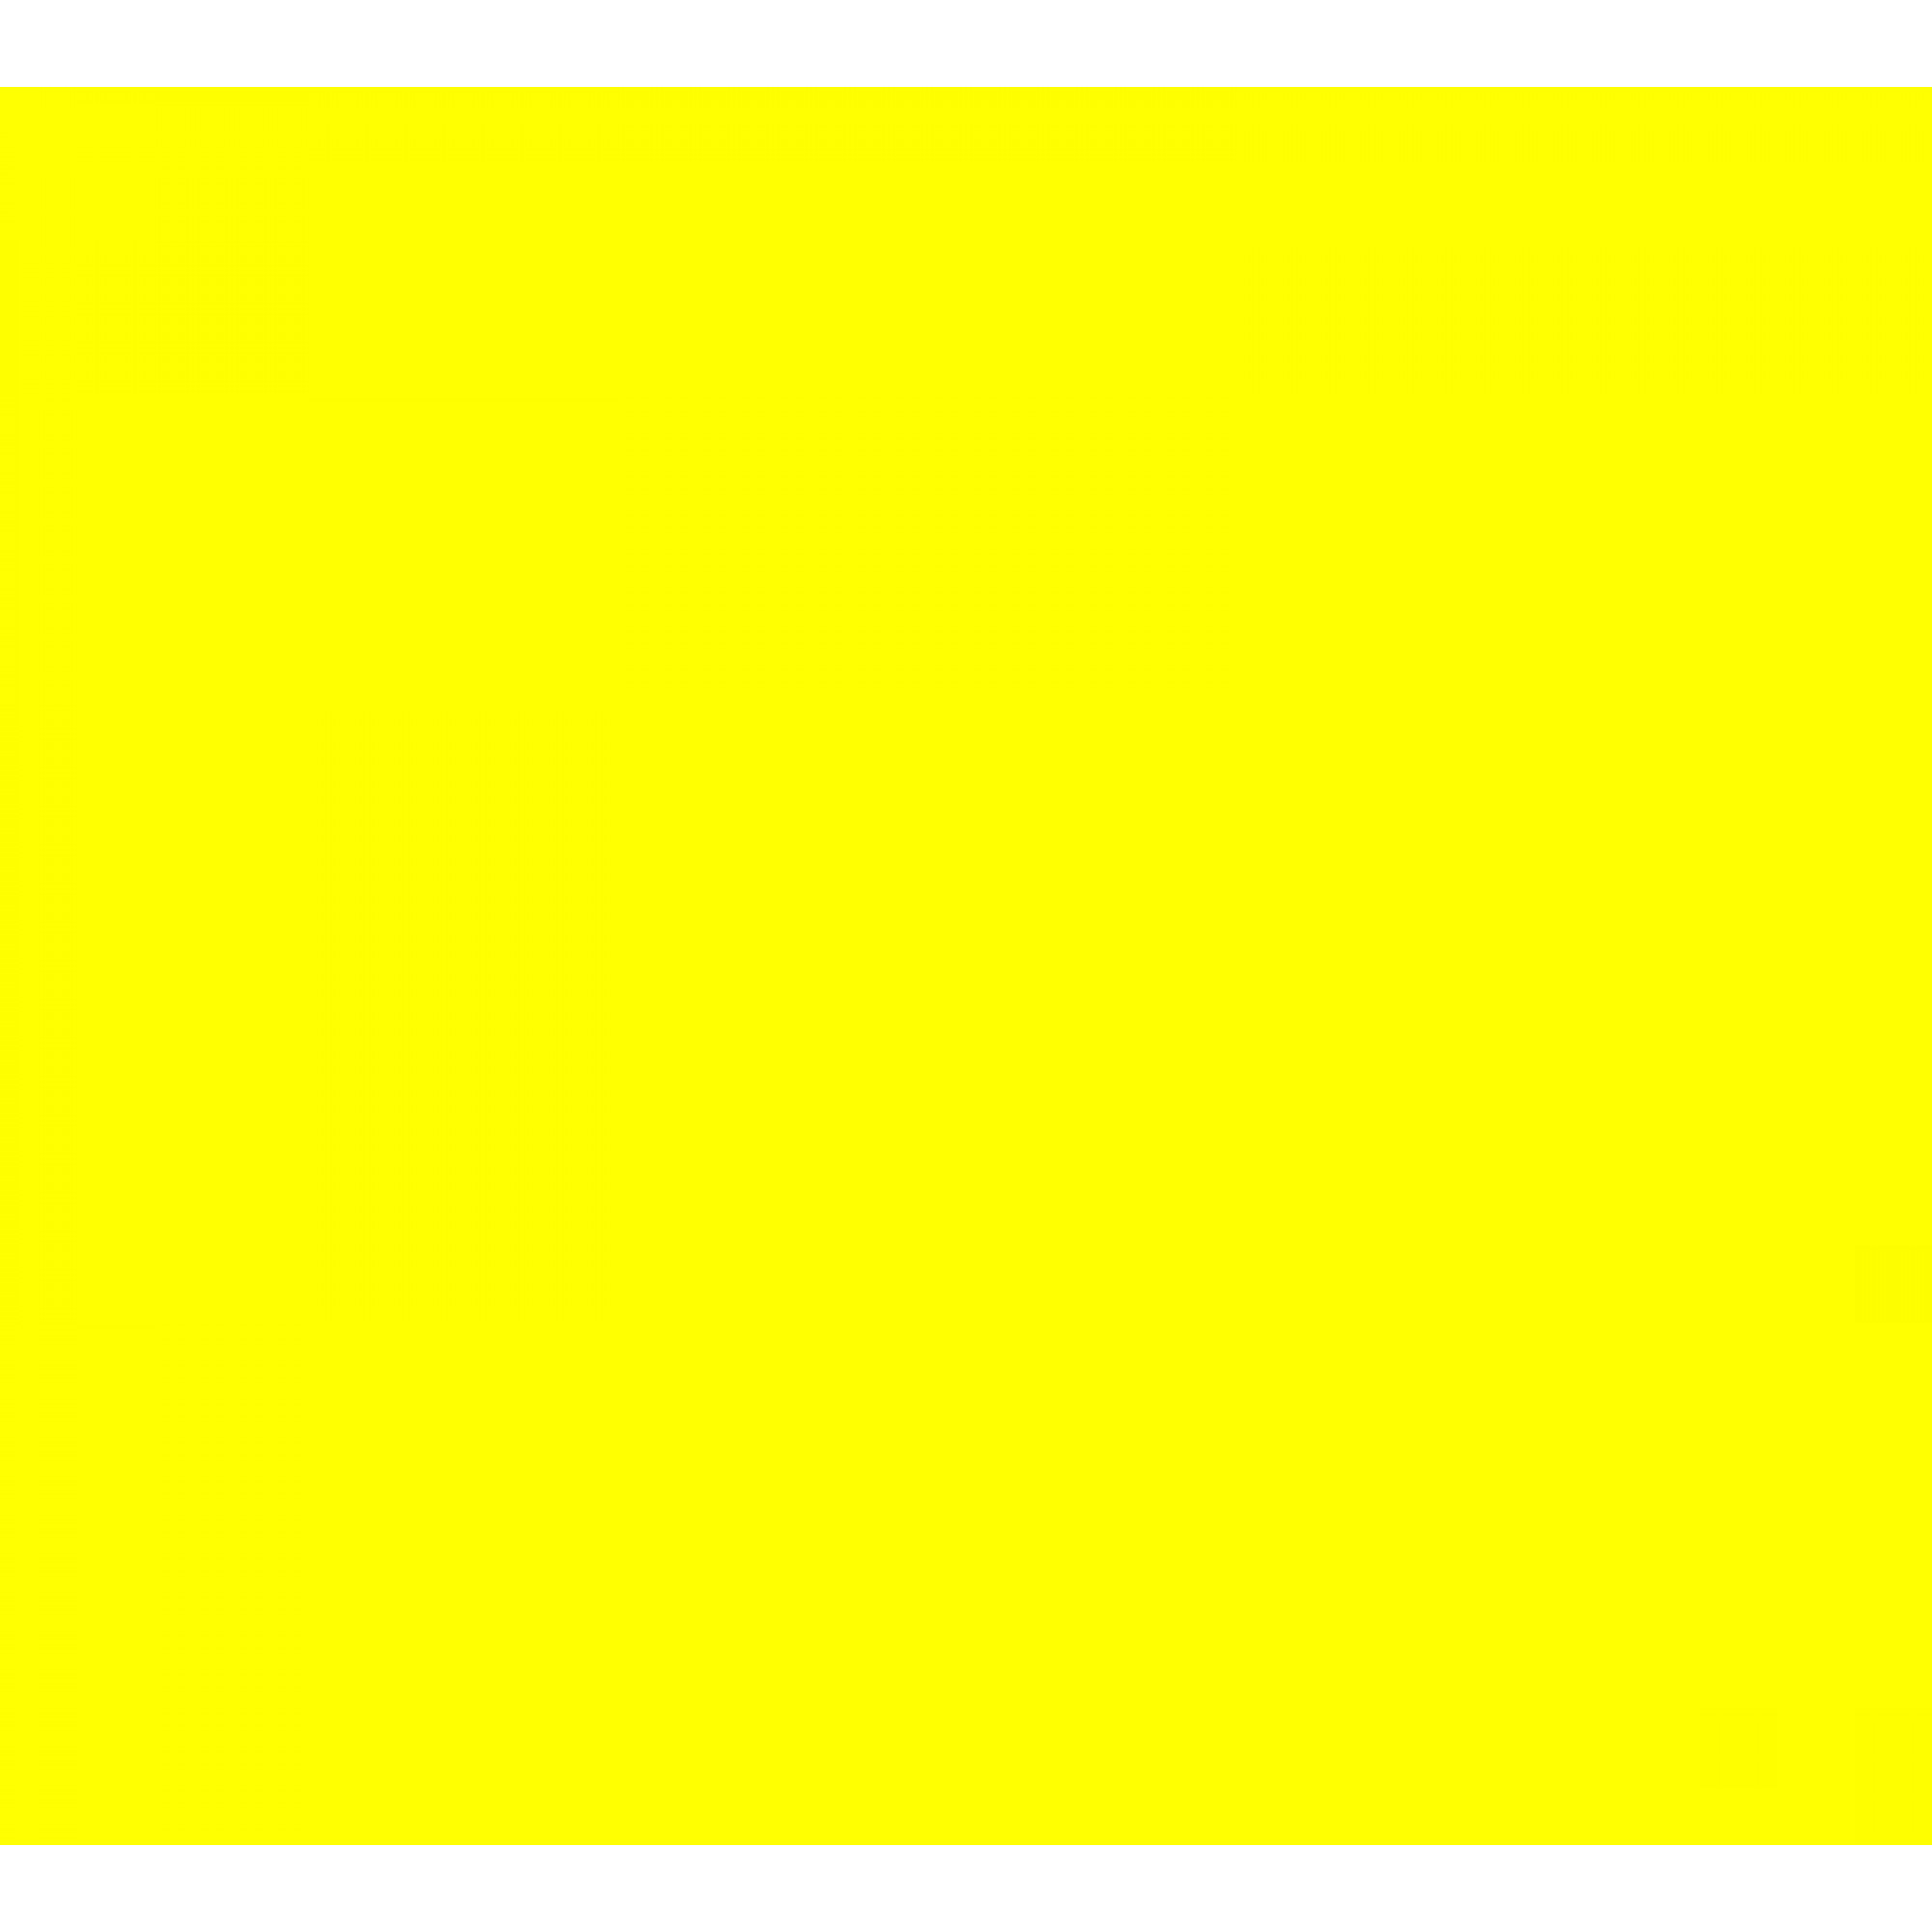 ROSCO E-Colour 010 Medium yellow 1.22 x 1m